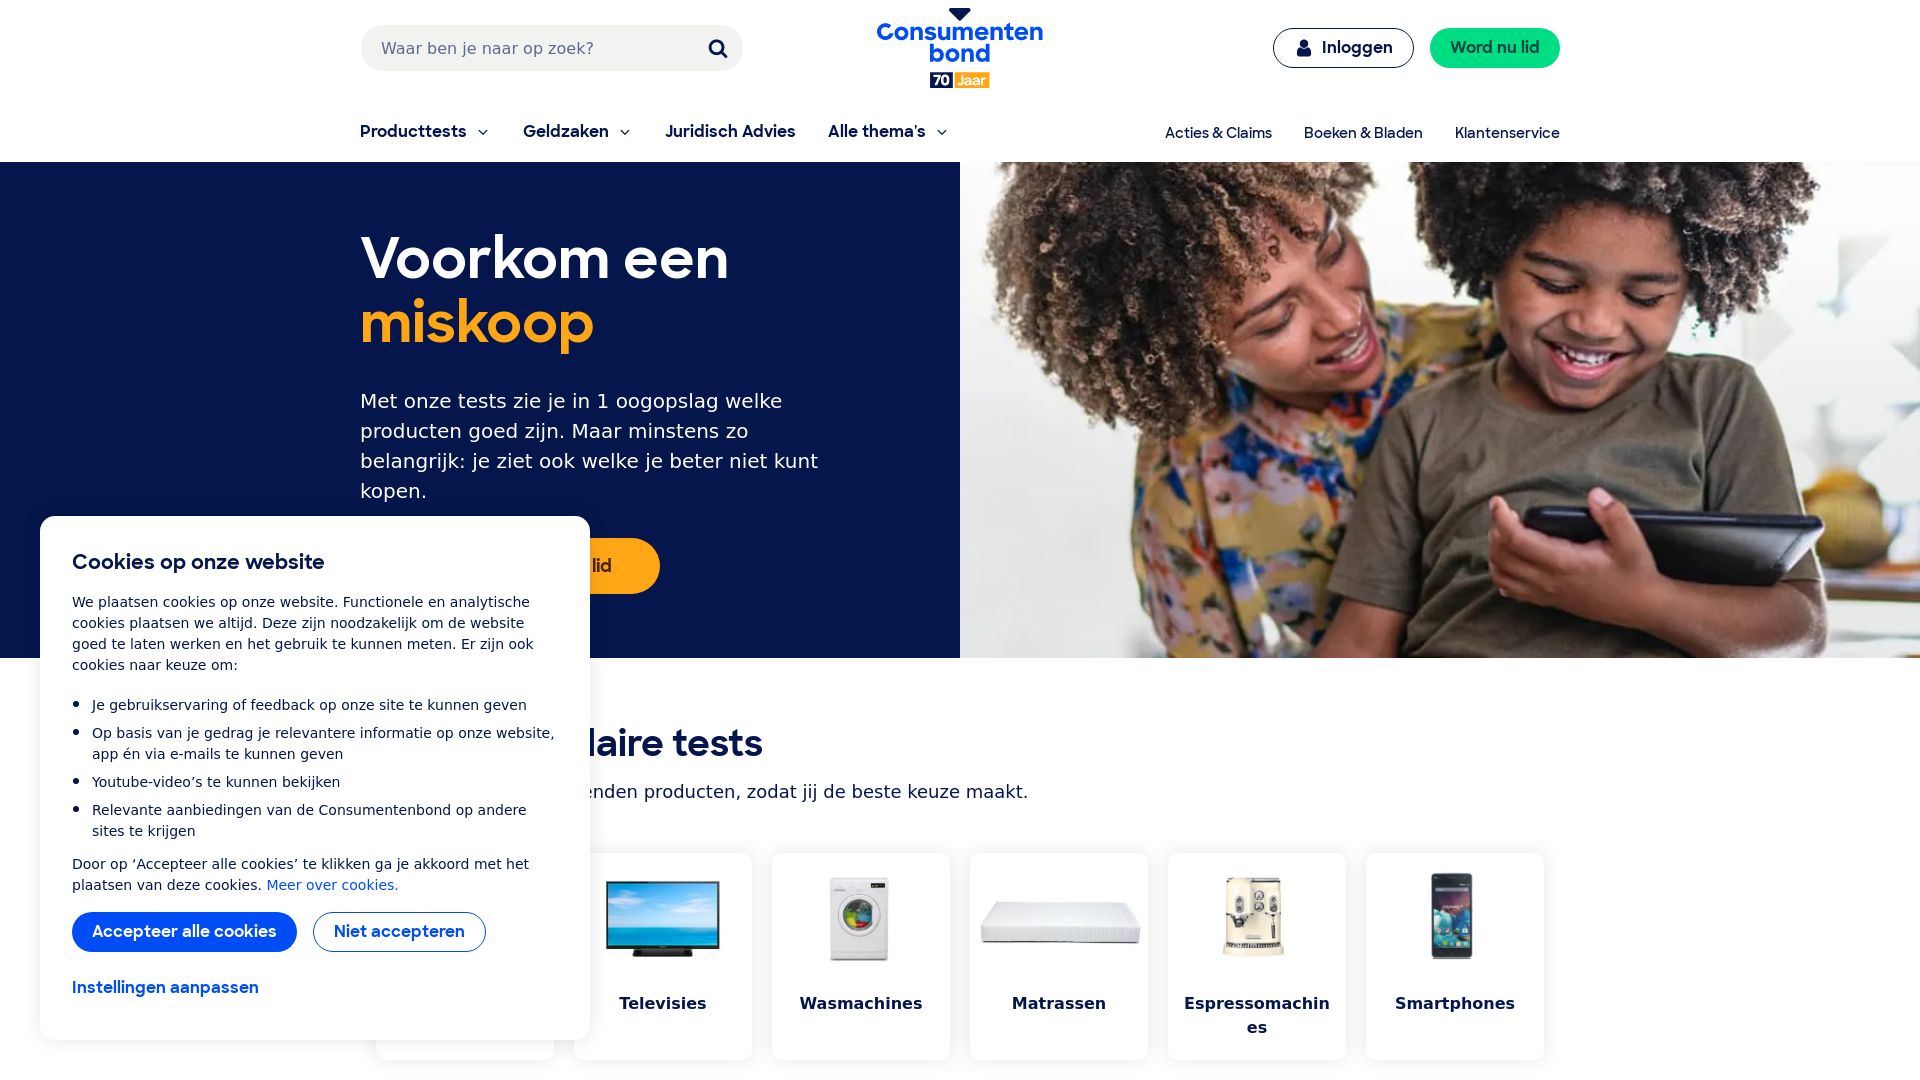 Status do site consumentenbond.nl está   ONLINE